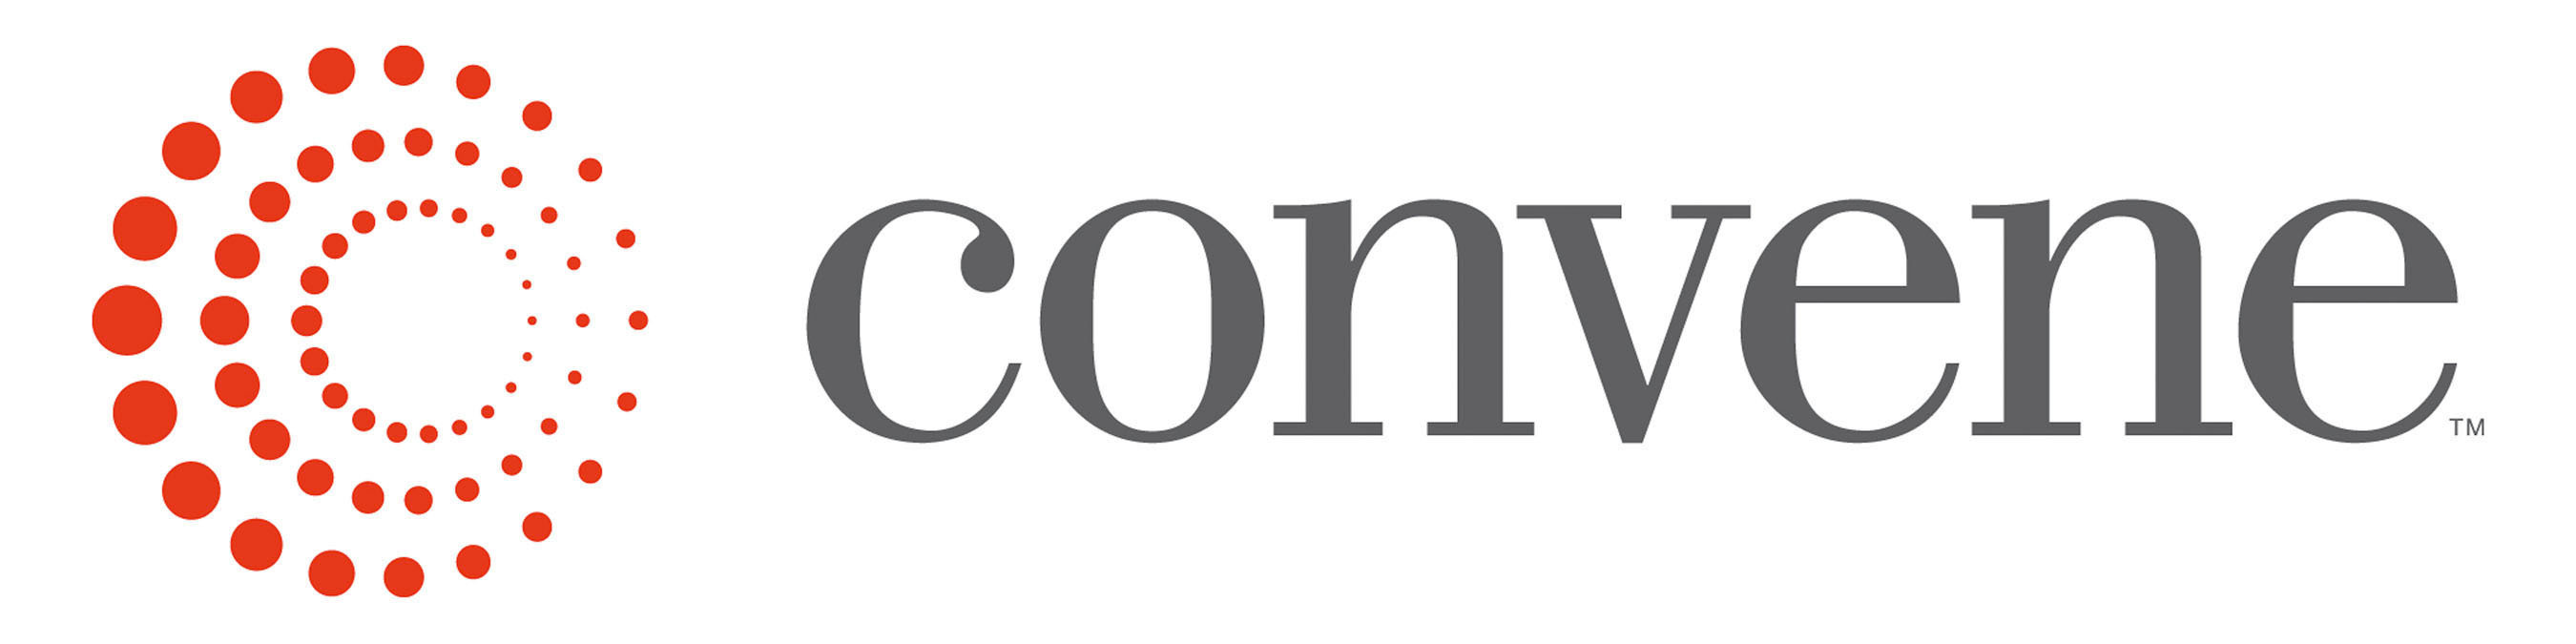 Convene logo. (PRNewsFoto/Convene) (PRNewsFoto/)